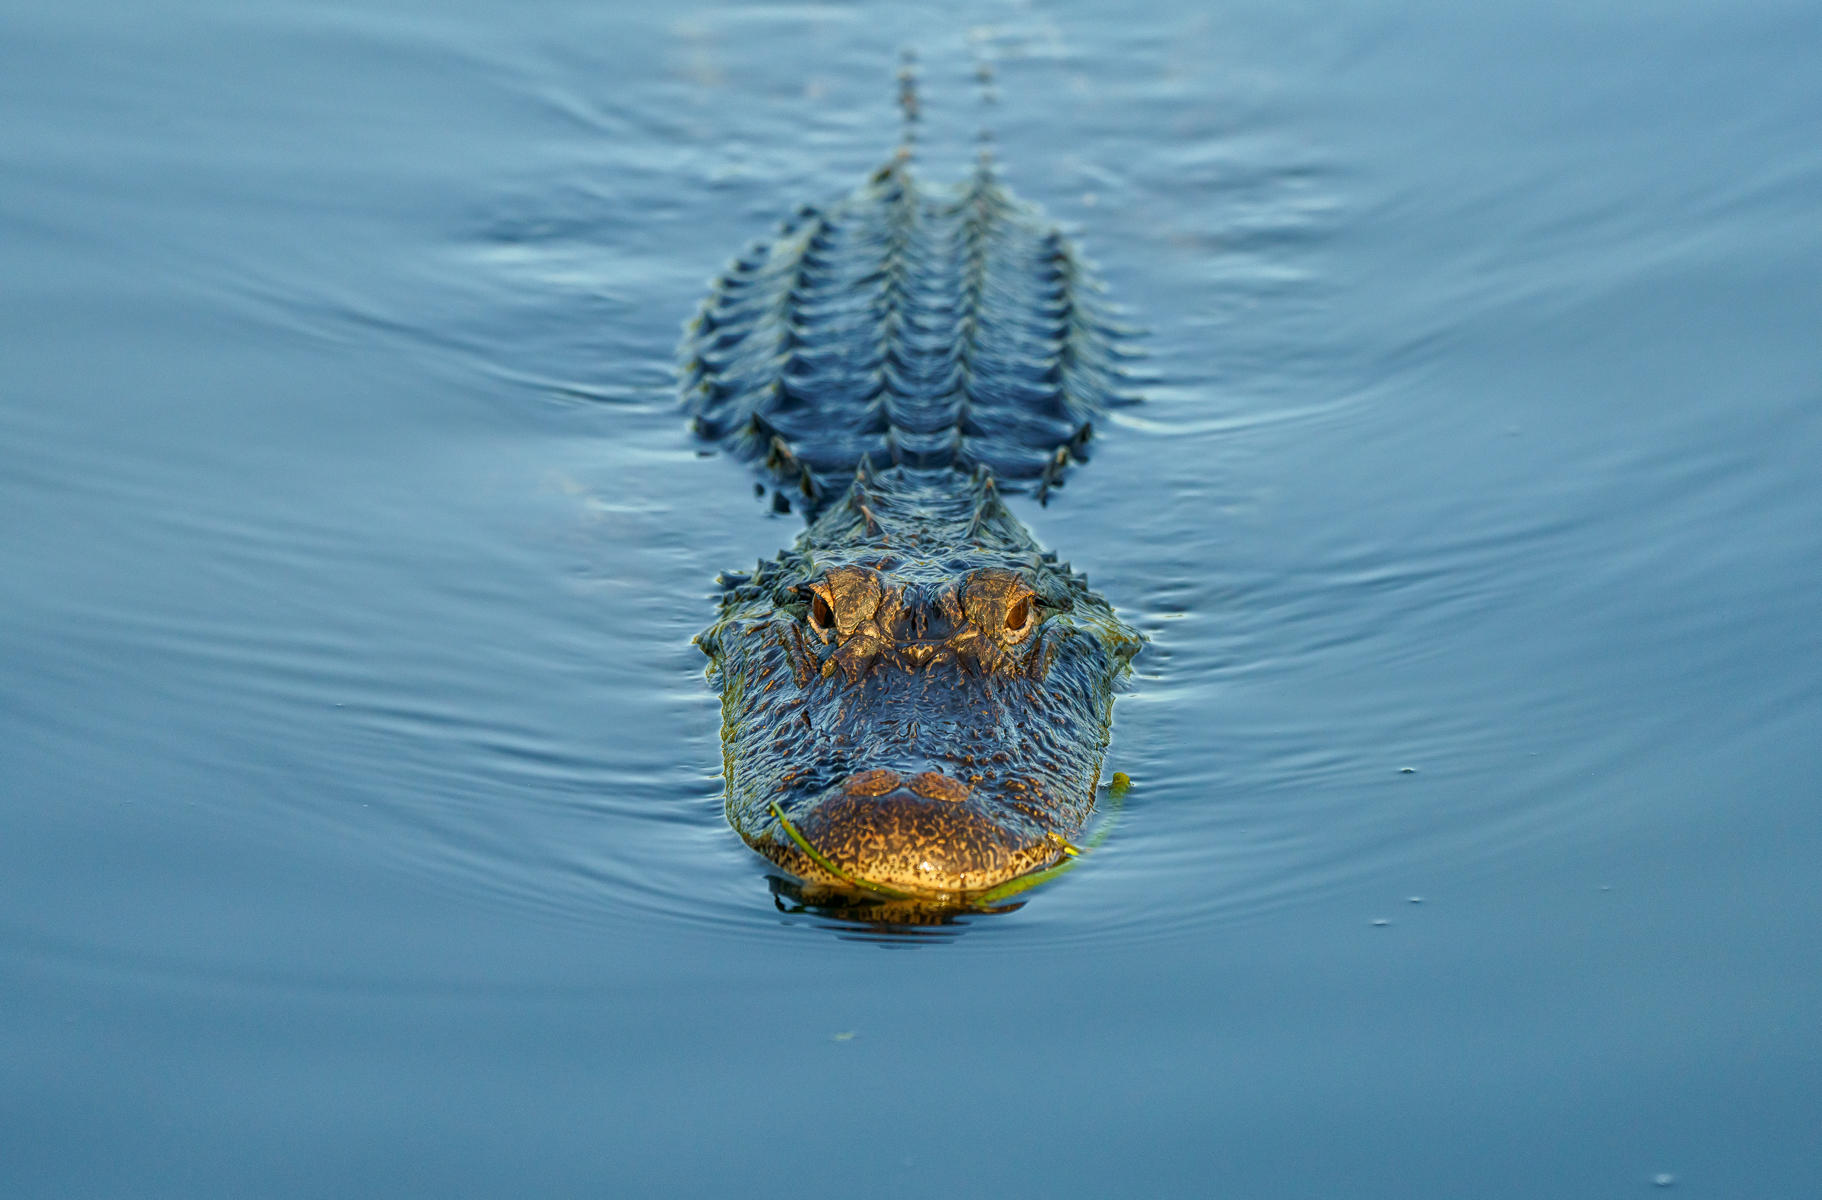 Gator Time, Alligator : Earthbound : ELIZABETH SANJUAN PHOTOGRAPHY